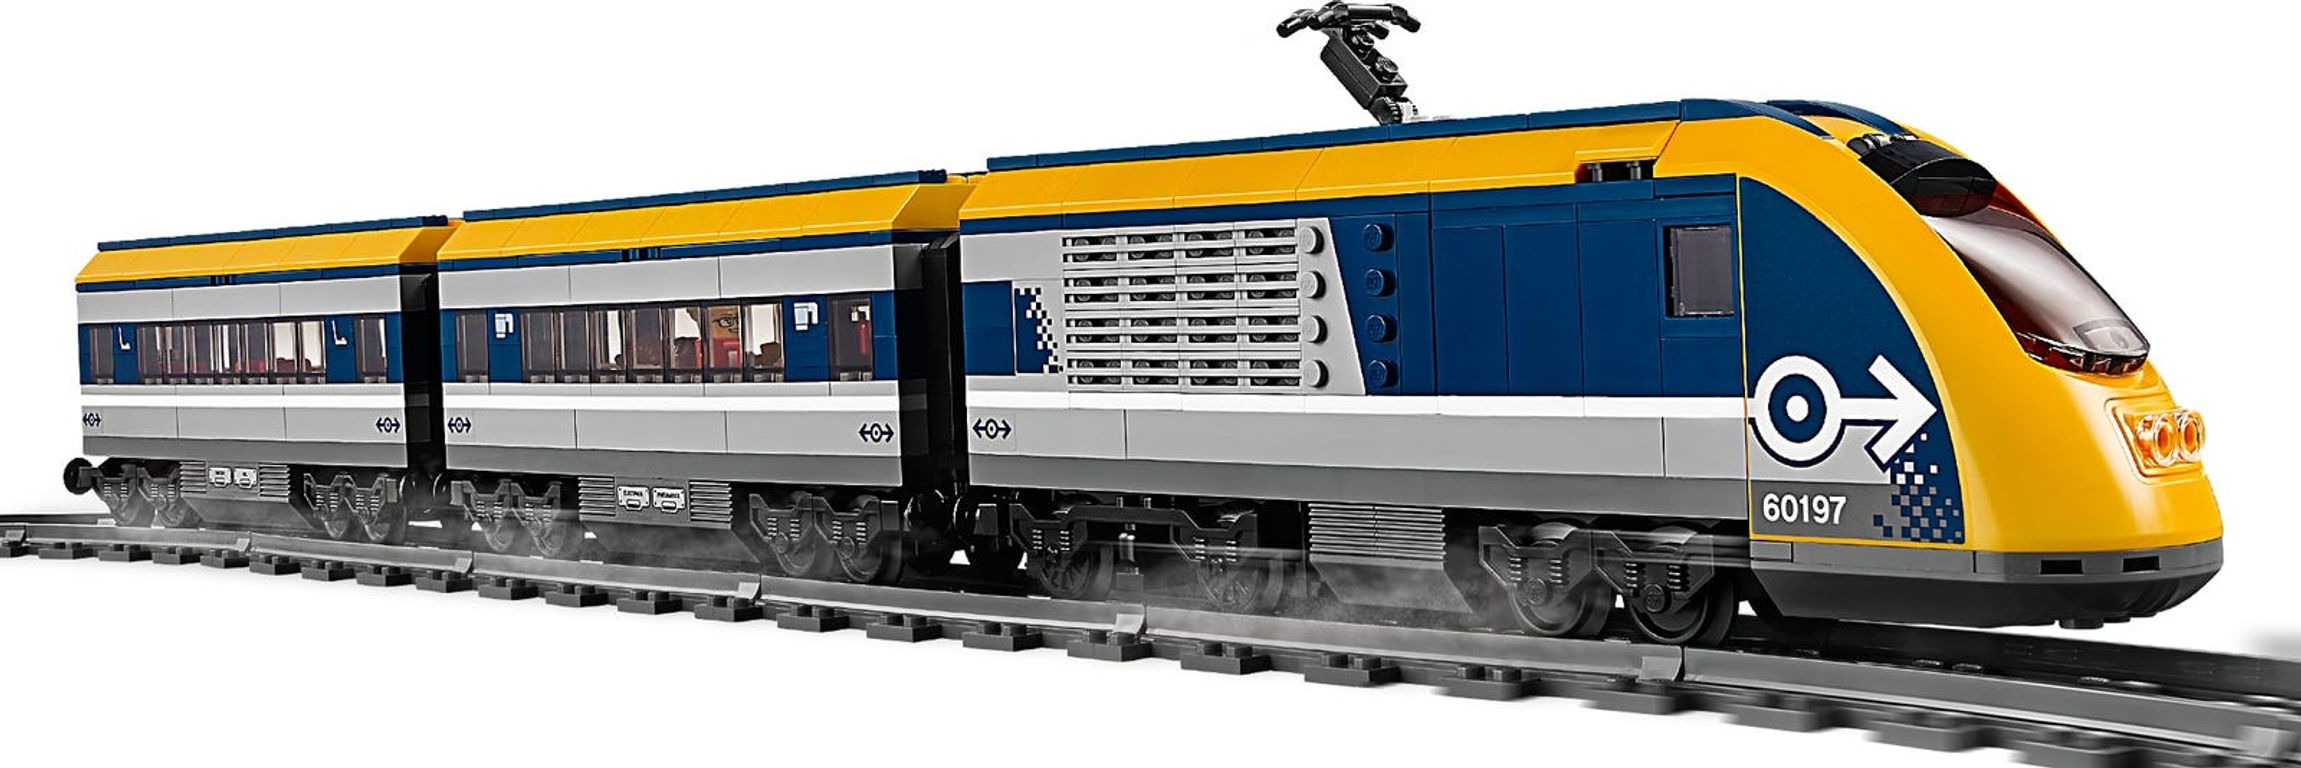 LEGO® City Passenger Train components